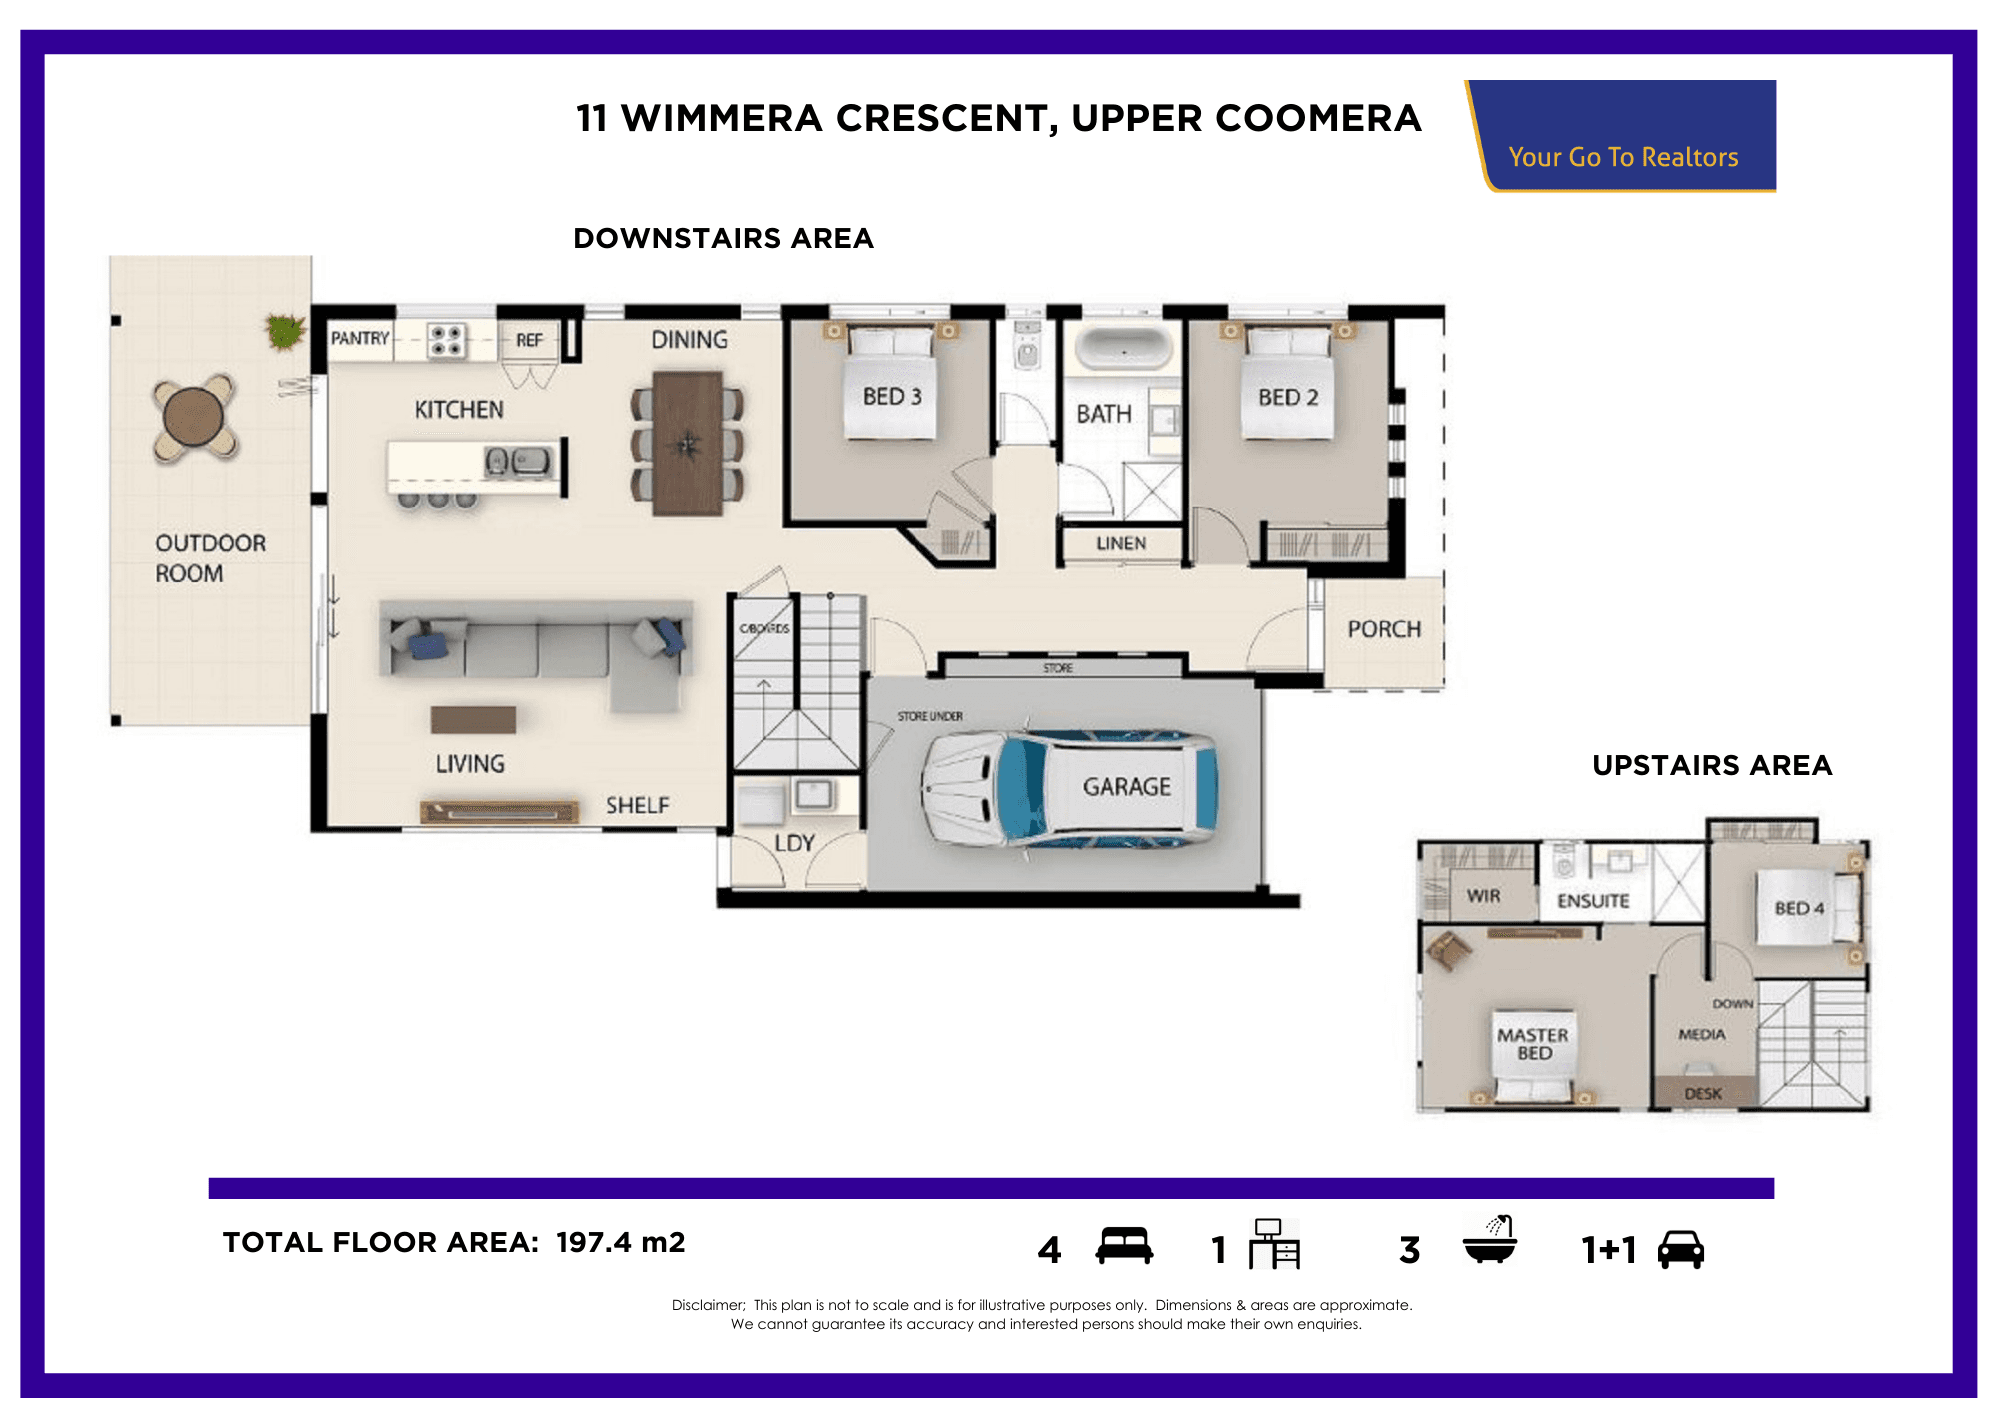 11 Wimmera Crescent, UPPER COOMERA, QLD 4209